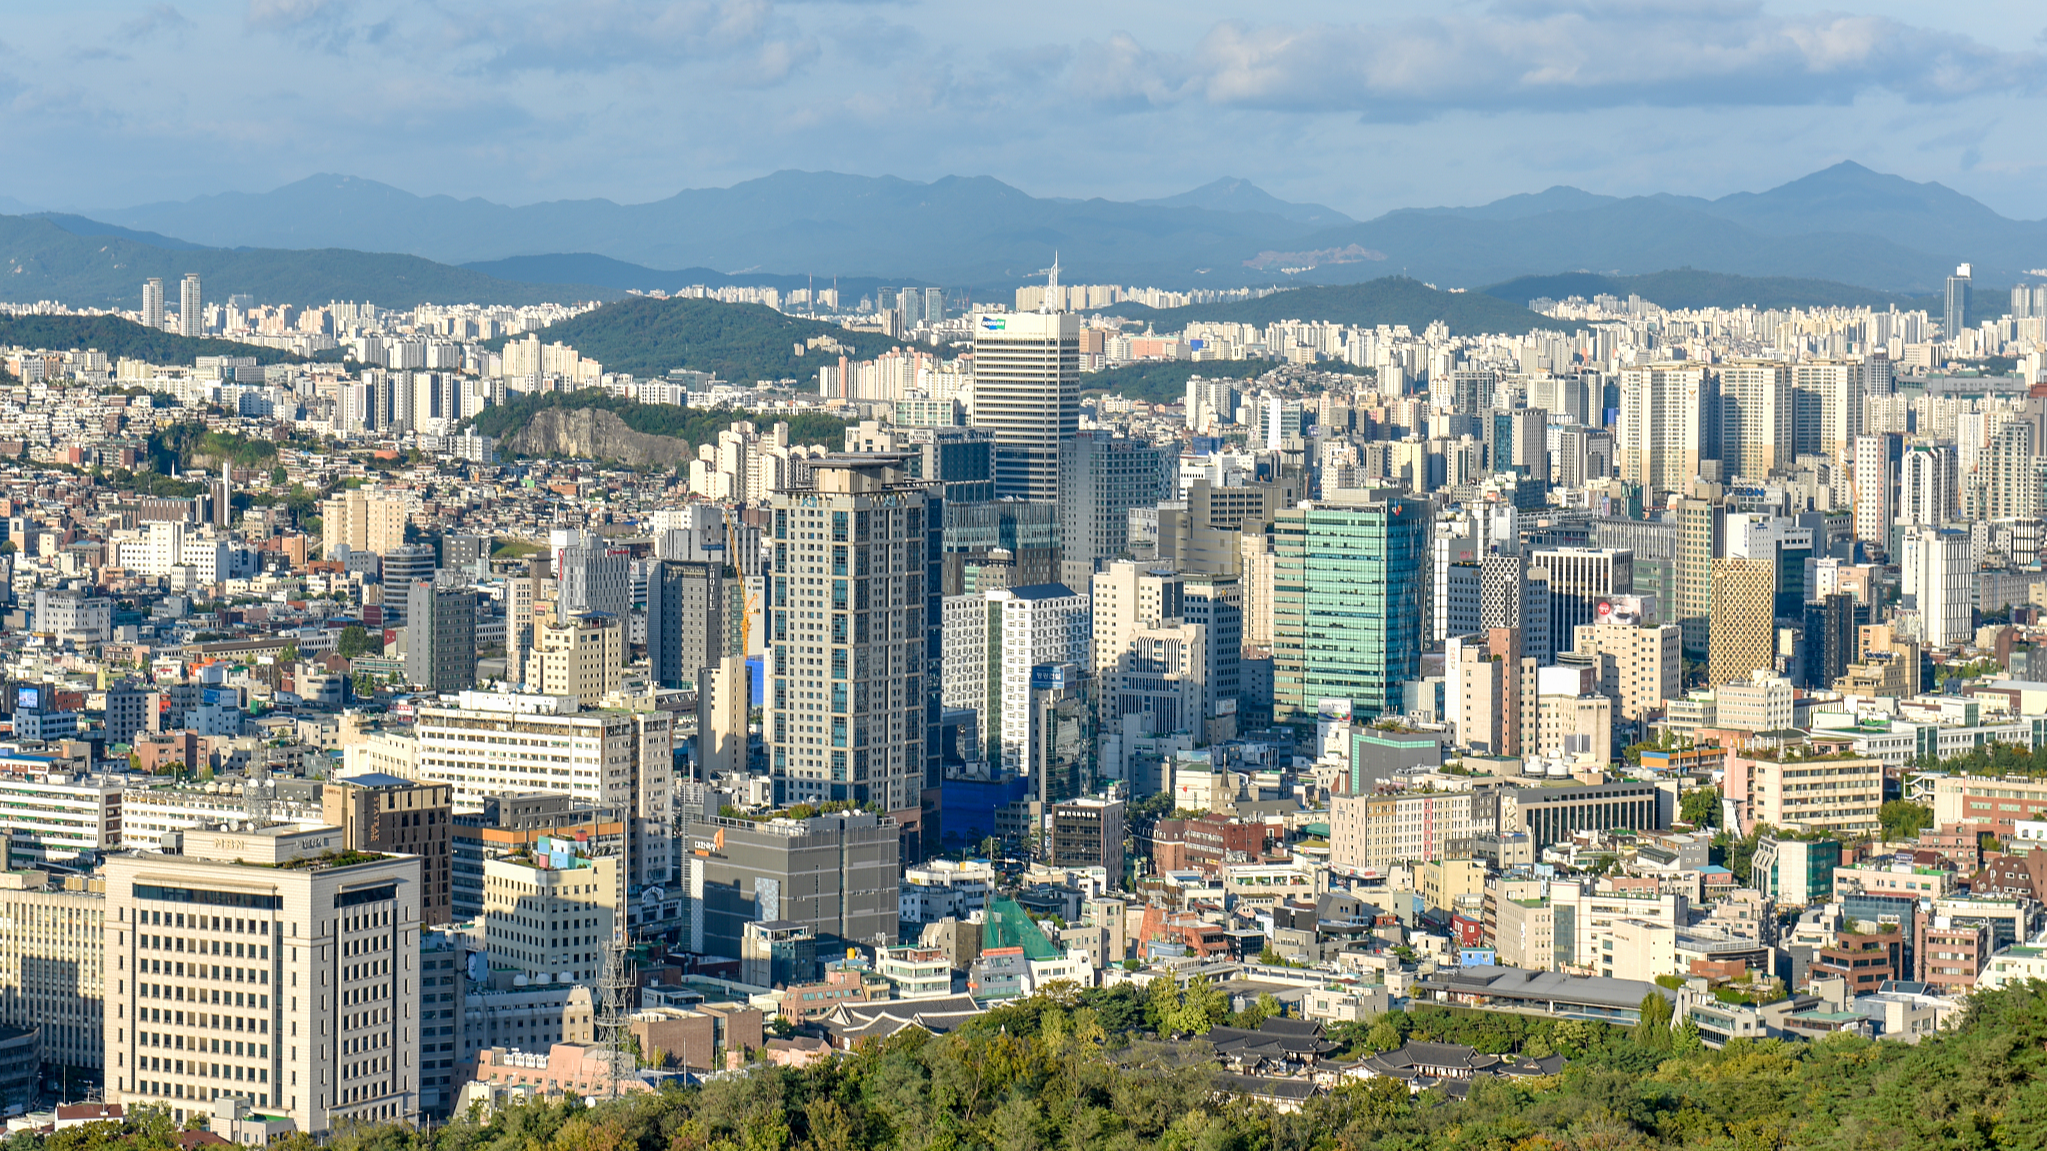 File photo of Seoul from Namsan Seoul Tower, Republic of Korea, October 1st, 2019. /CFP